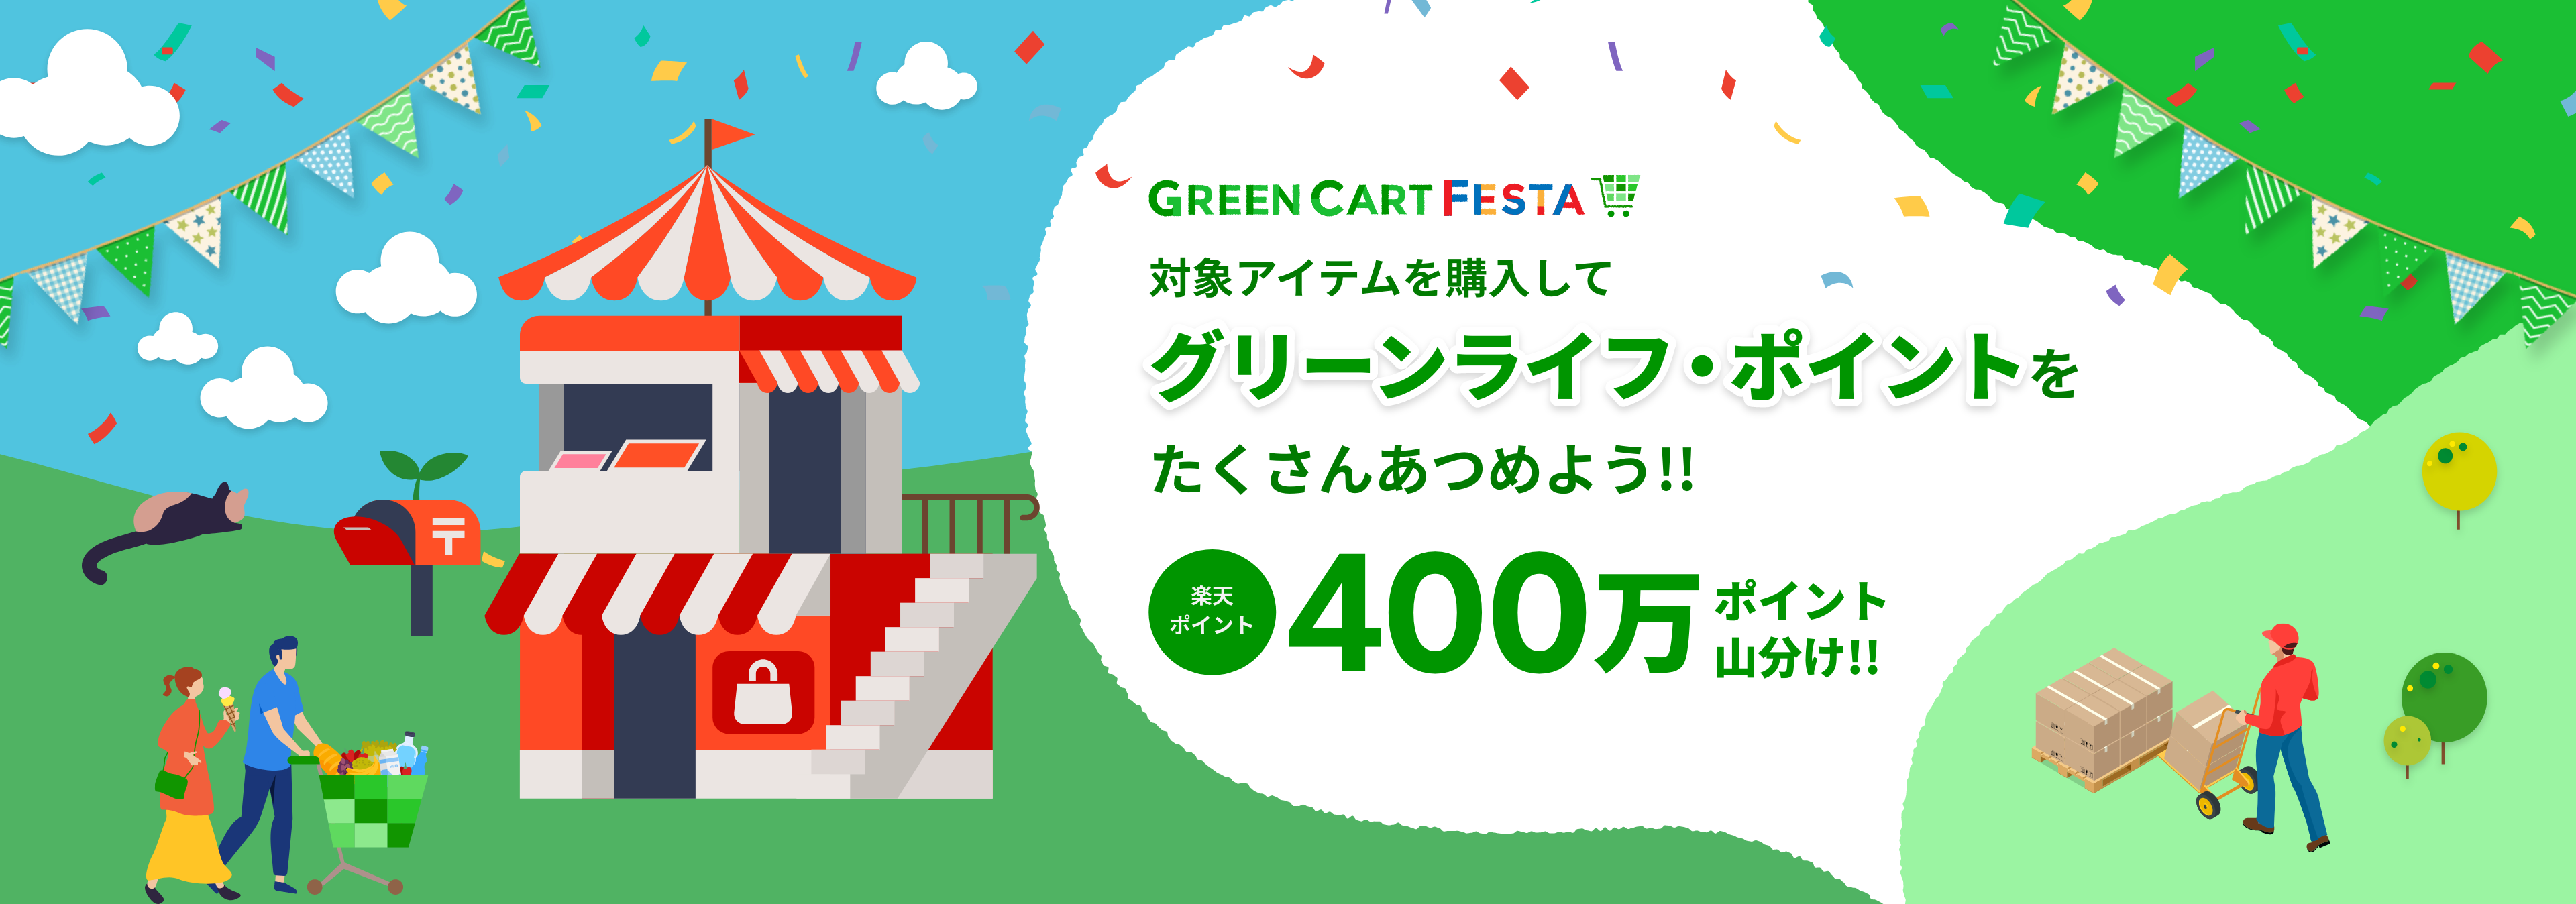 GREEN CART FESTA 対象アイテムを購入してグリーンライフ・ポイントをたくさんあつめよう!! 楽天ポイント400万ポイント山分け!!